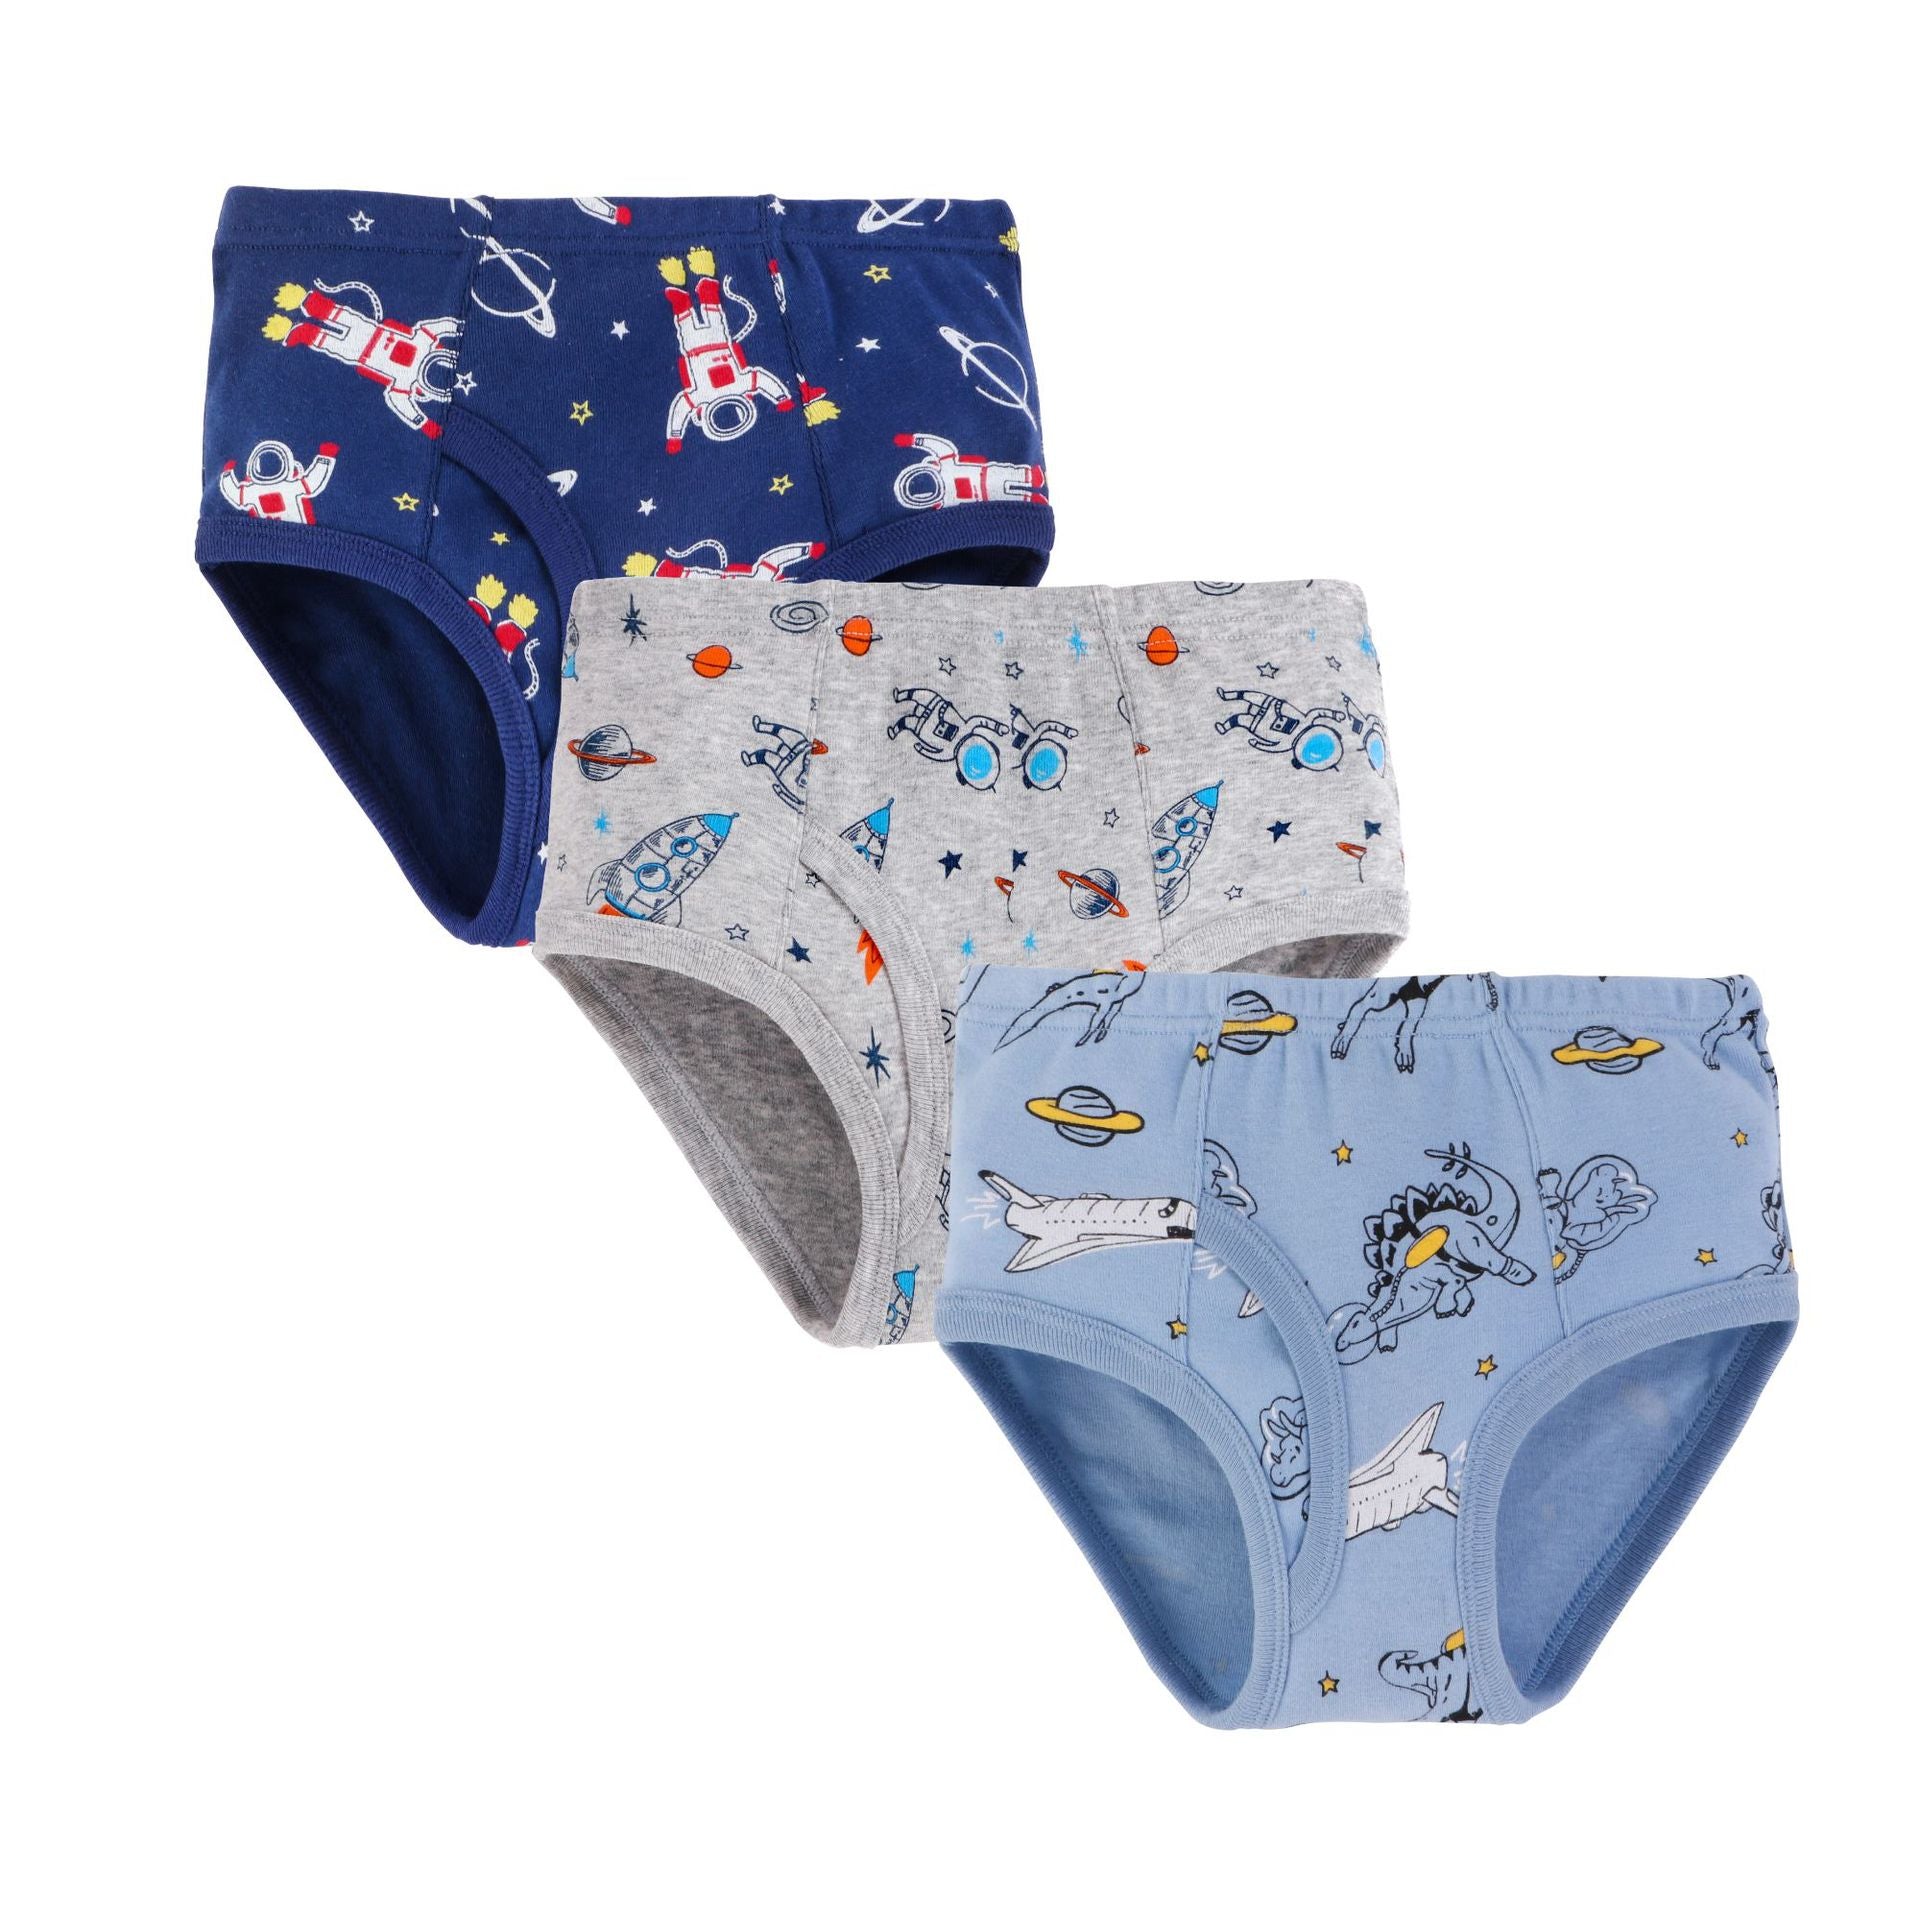 Boys' Underwear Threaded Cotton Dinosaur Cartoon Shorts For Small And Medium-sized Children's Briefs